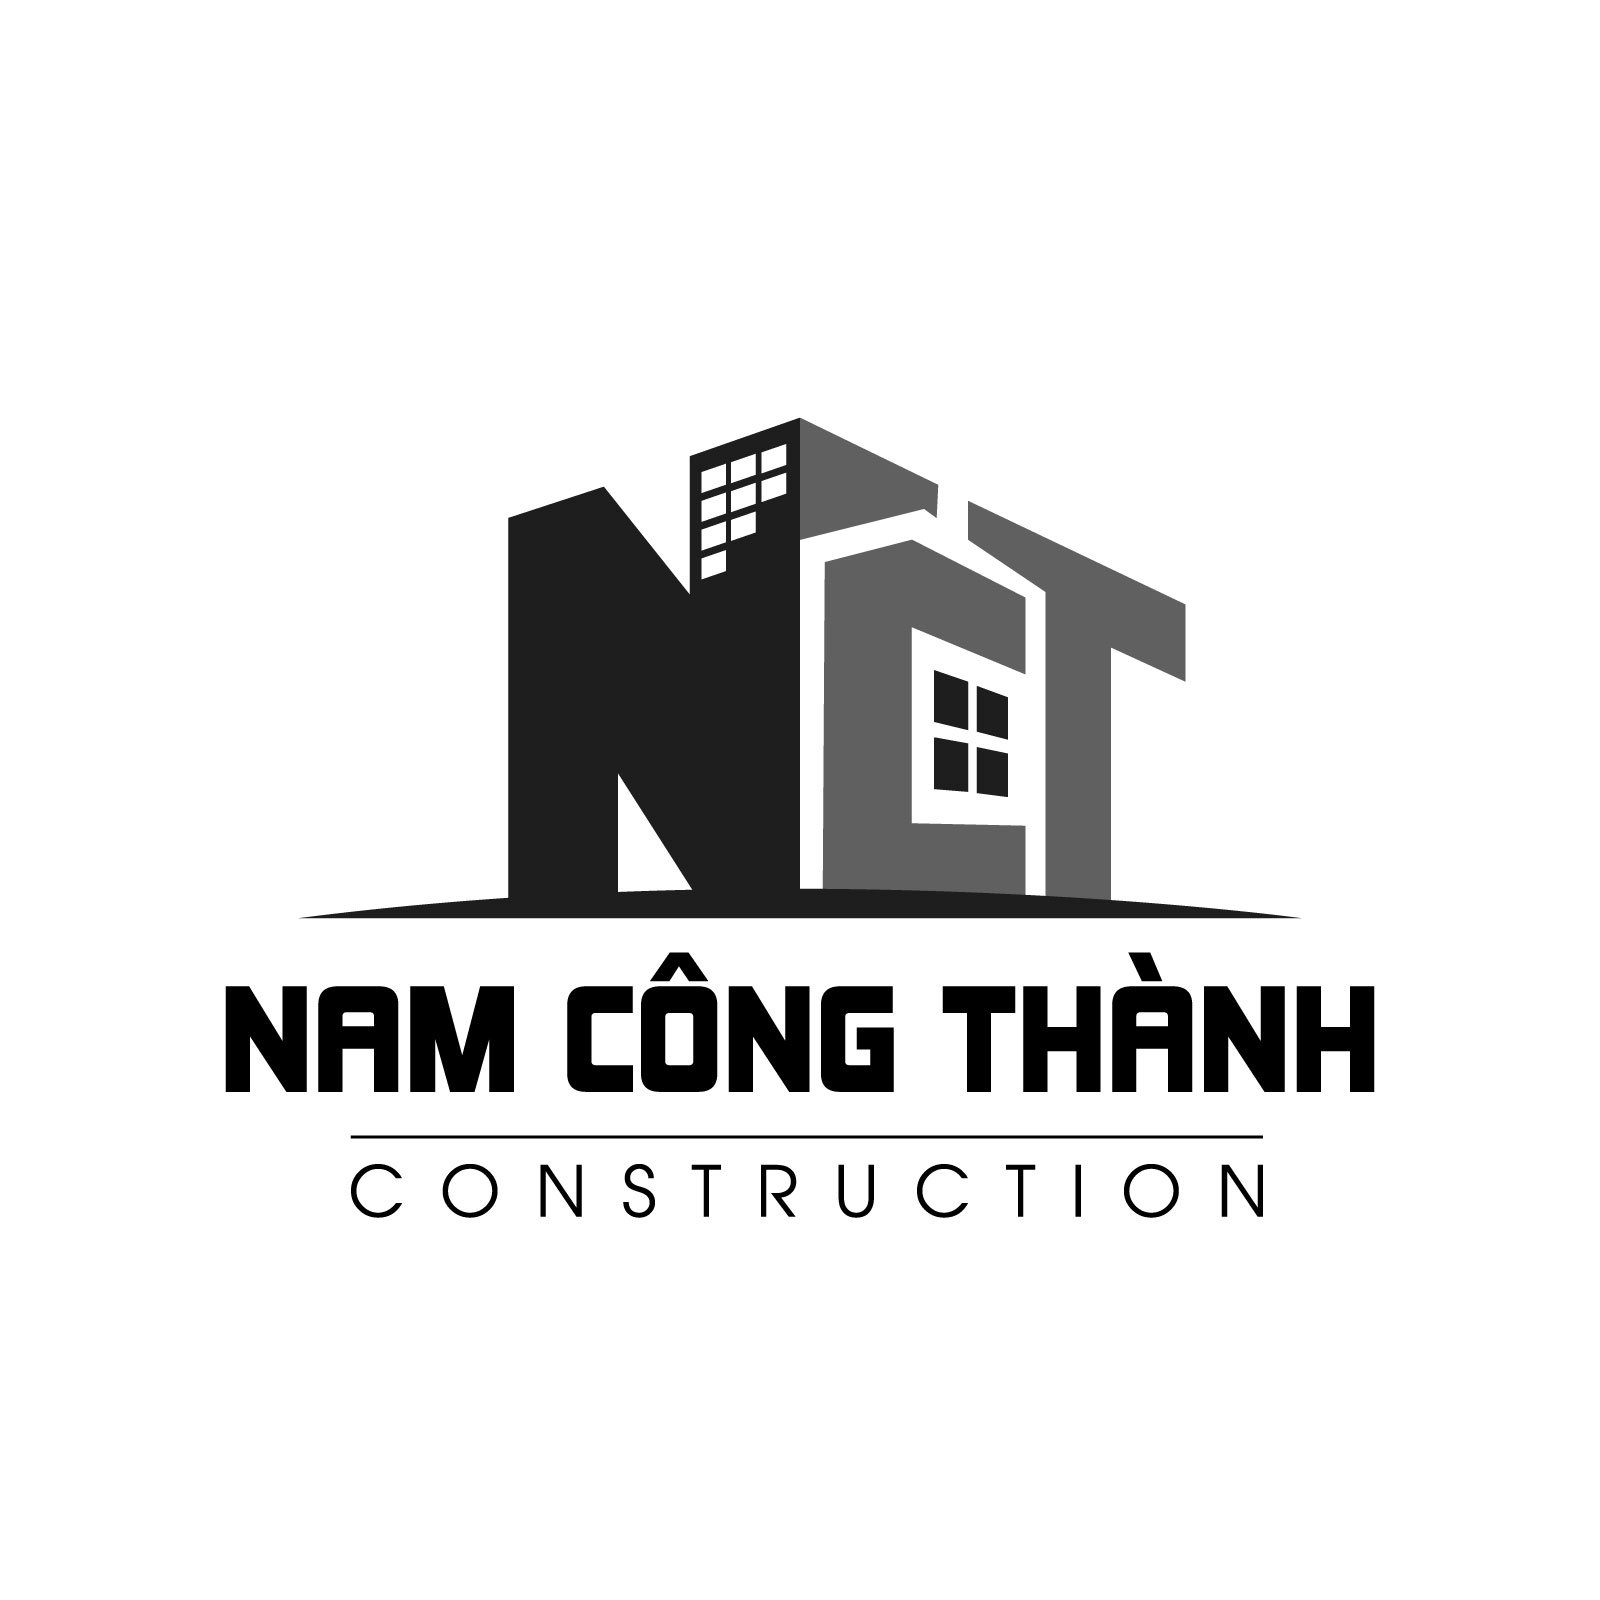 Nam Cong Thanh